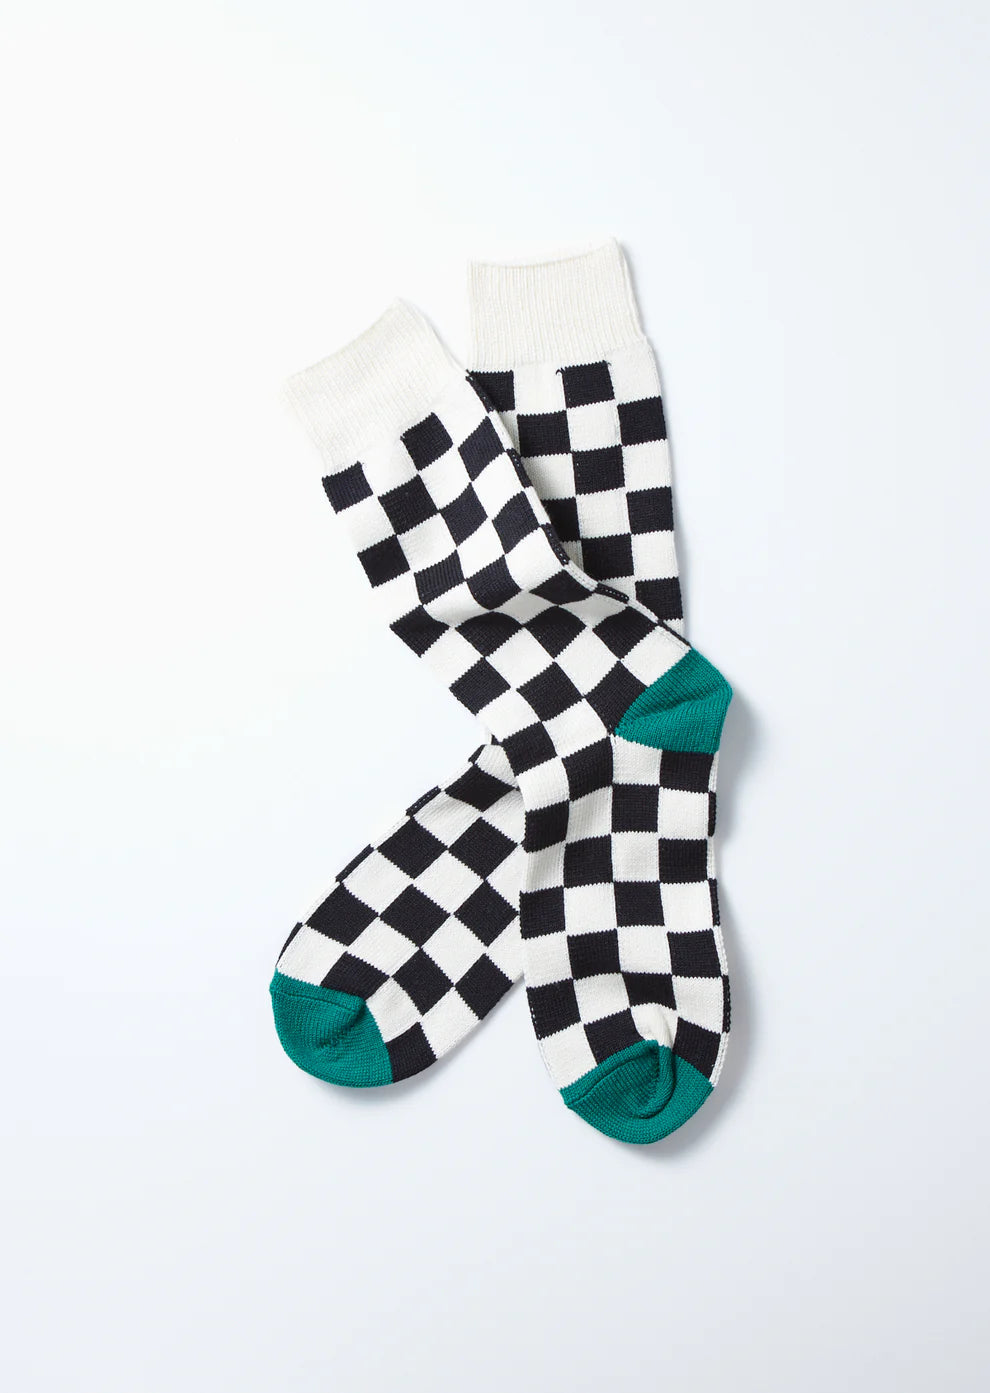 Checkerboard Crew Socks  RoToTo Ivory/Black/Green L 